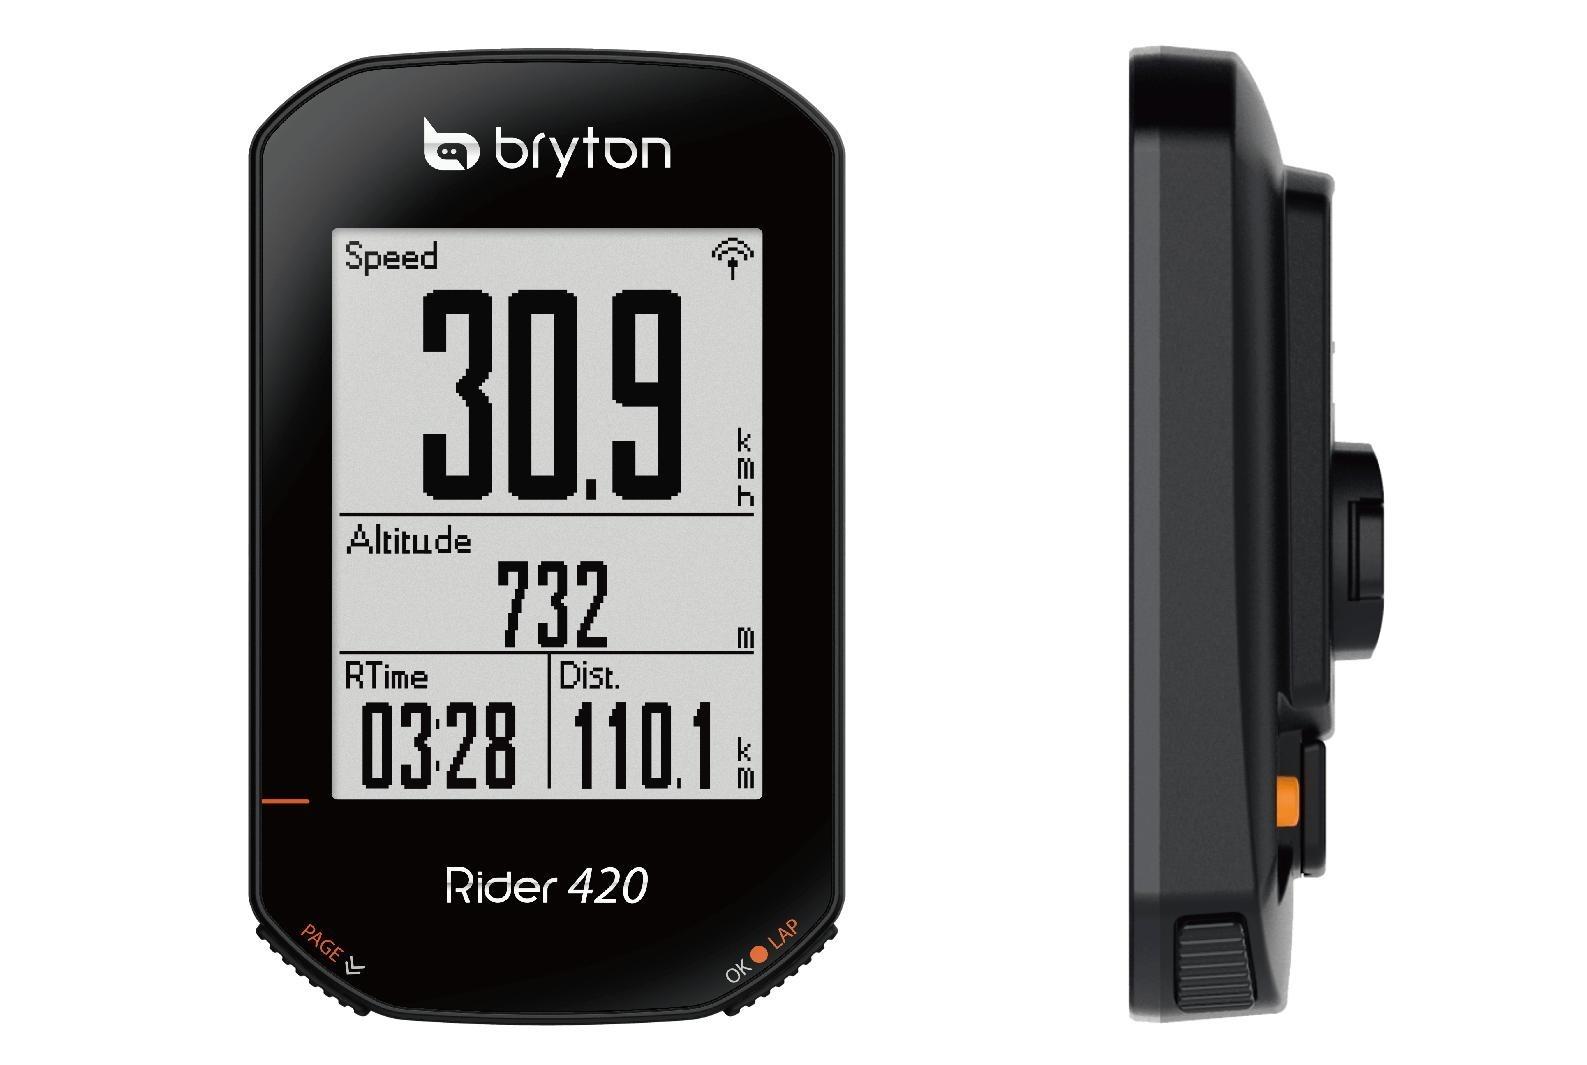 Bryton Rider 420E GPS Cycling Computer - Head Unit